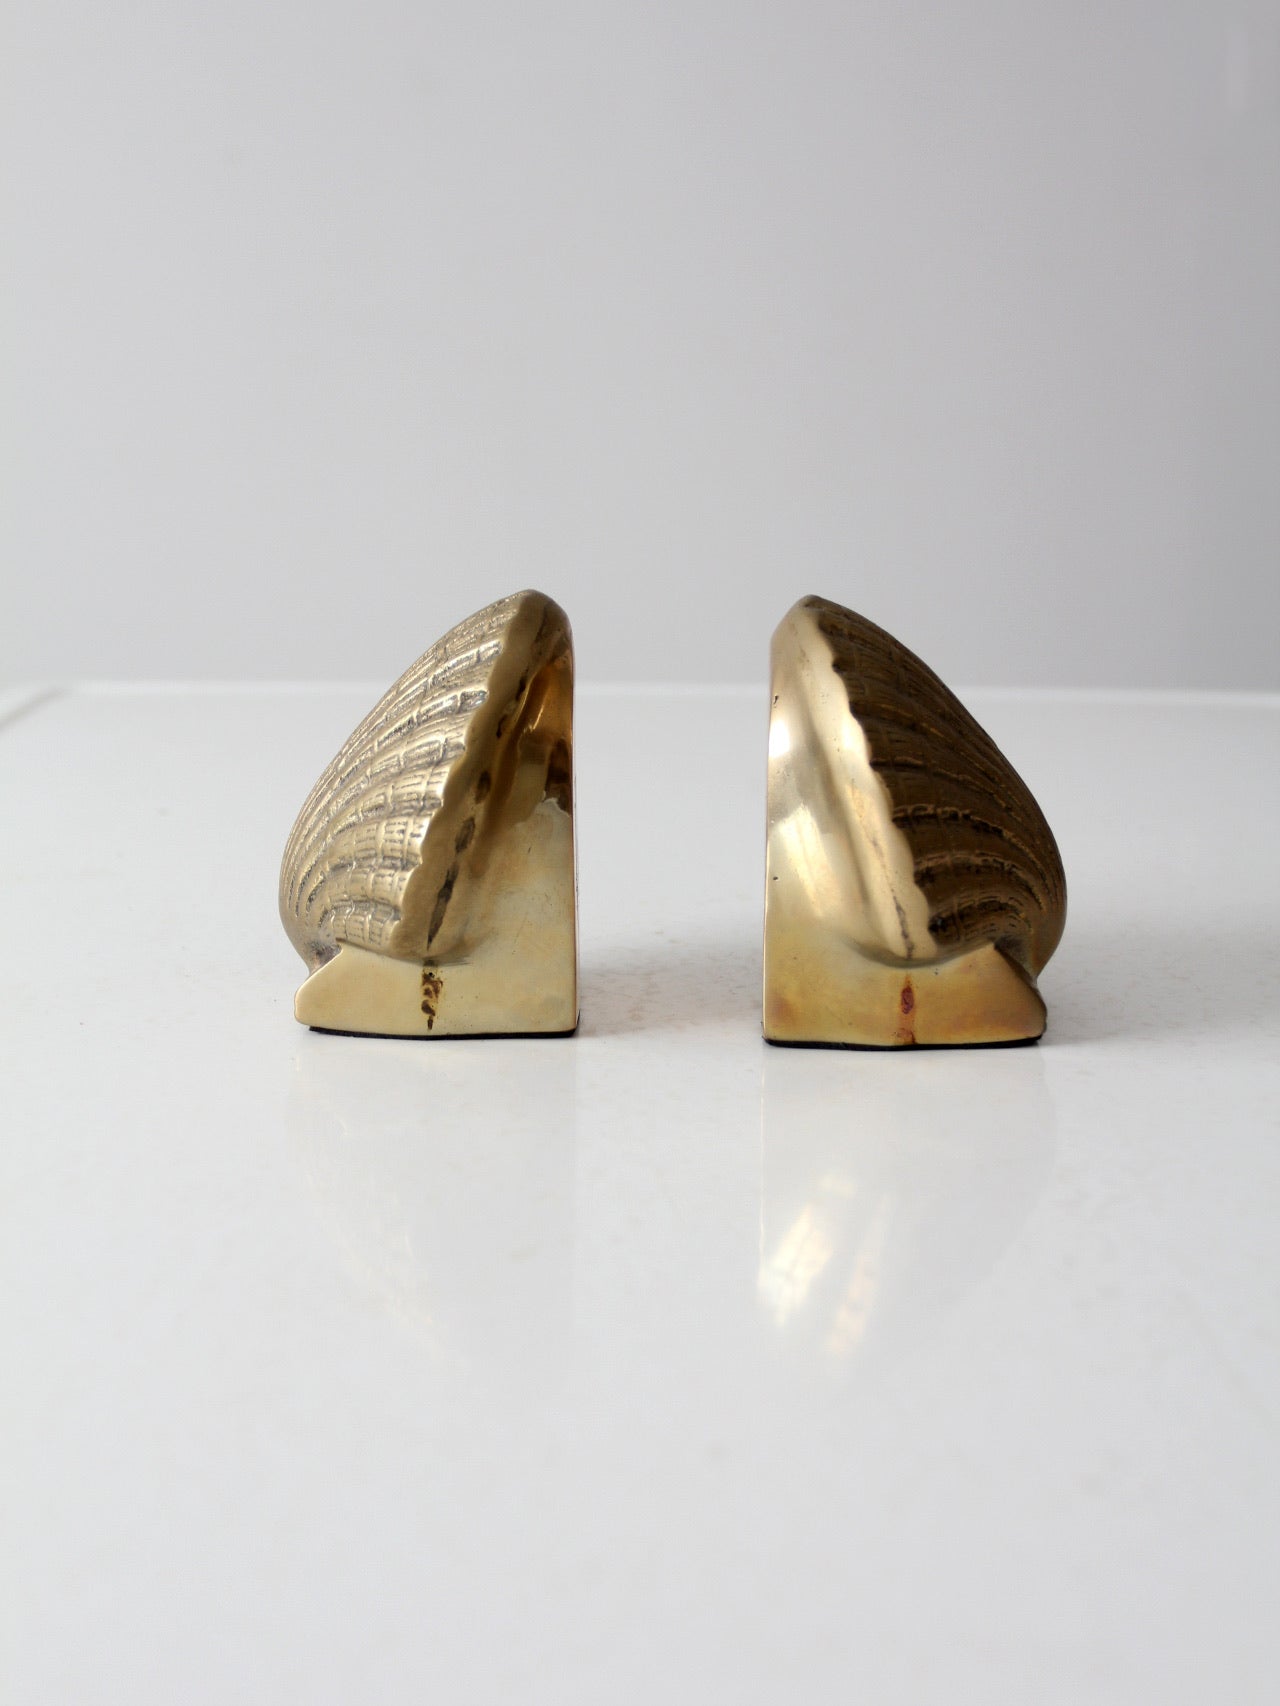 Vintage Brass Shell Bookends - Brass